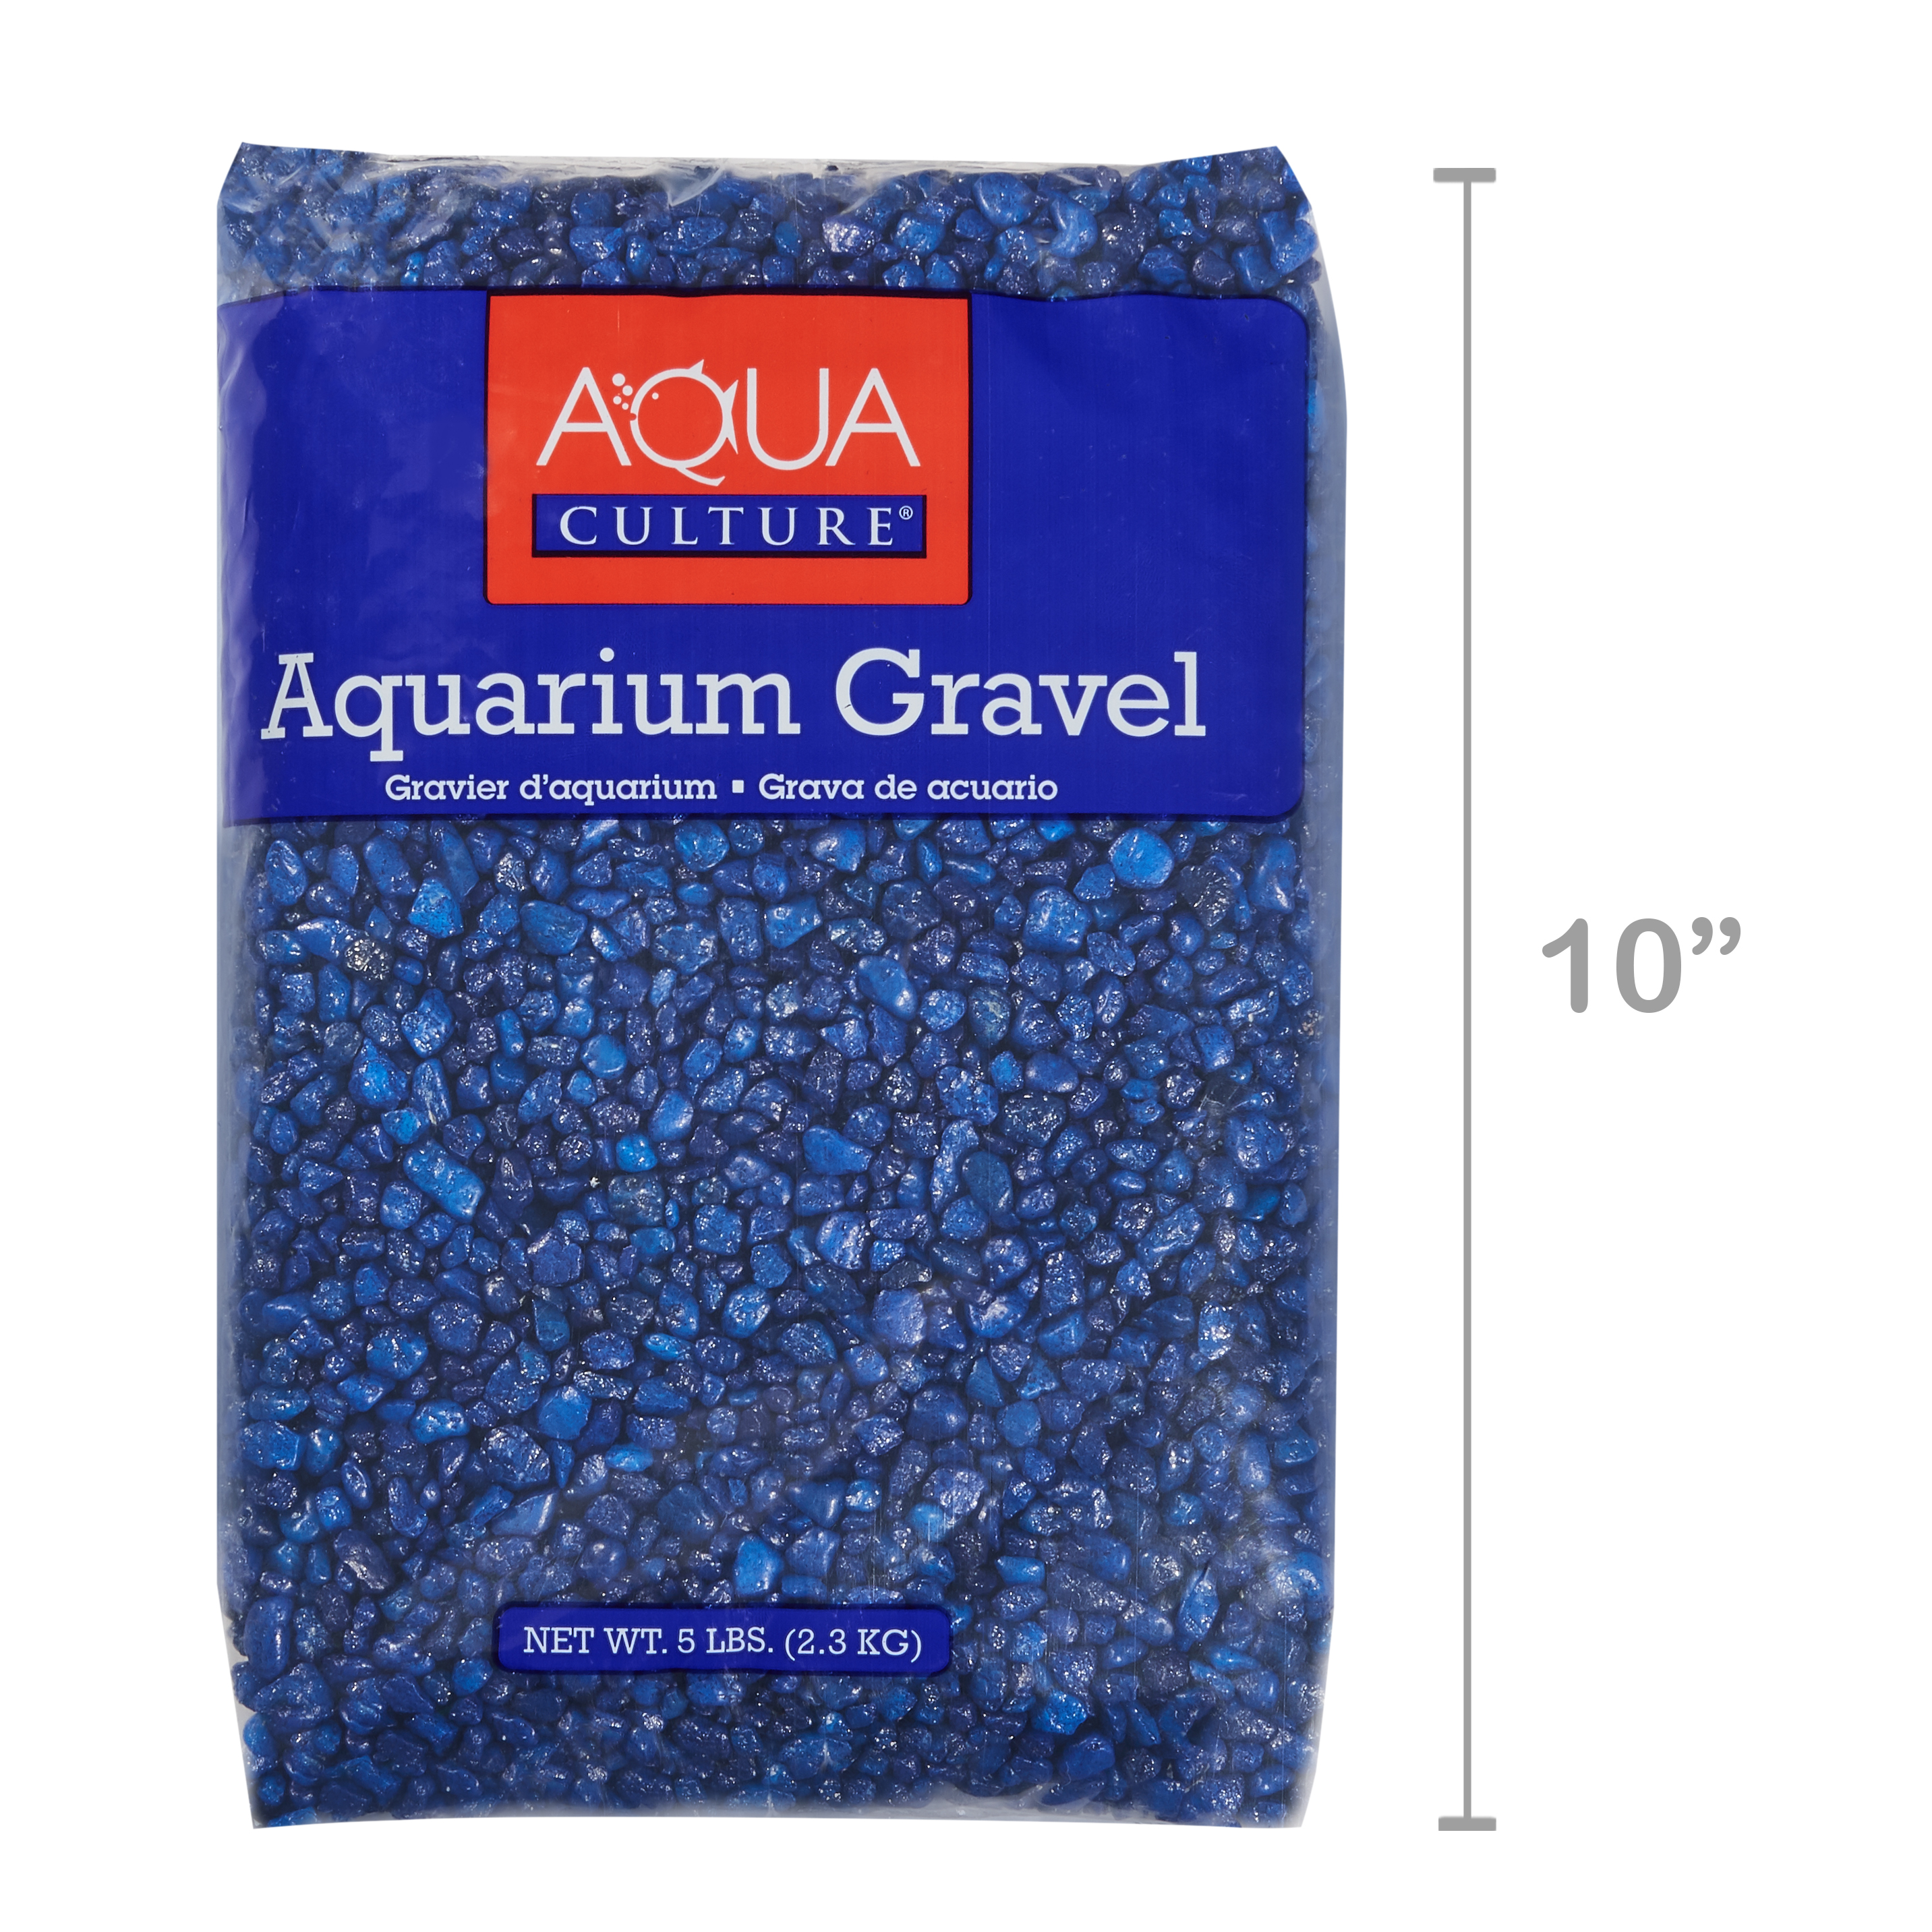 Aqua Culture Aquarium Gravel, Dark Blue, 5 lb - image 3 of 4